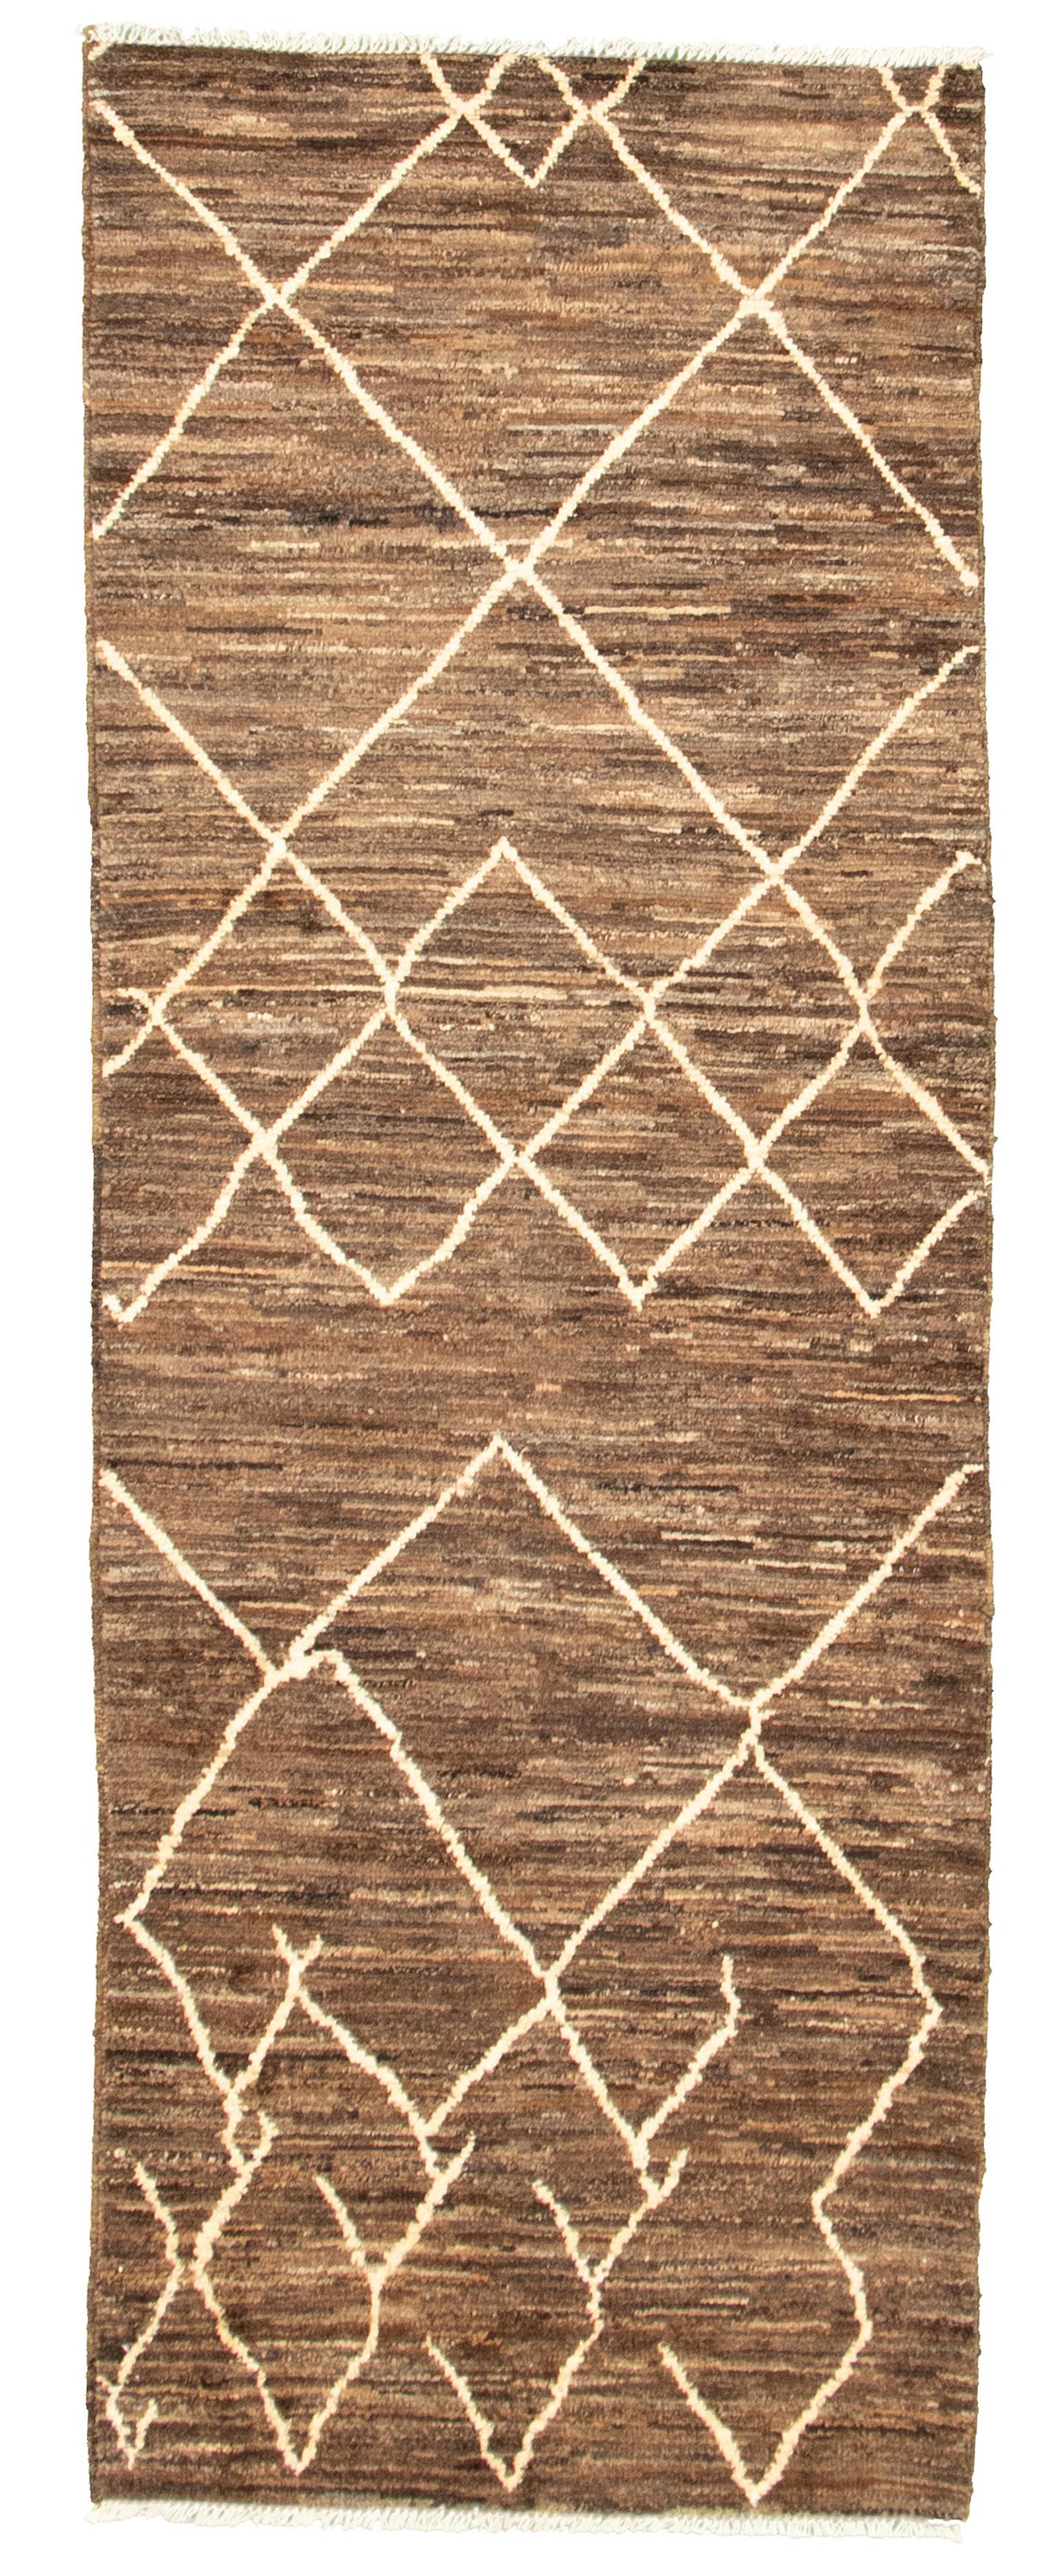 Hand-knotted Marrakech Dark Brown Wool Rug 2'10" x 7'9" Size: 2'10" x 7'9"  